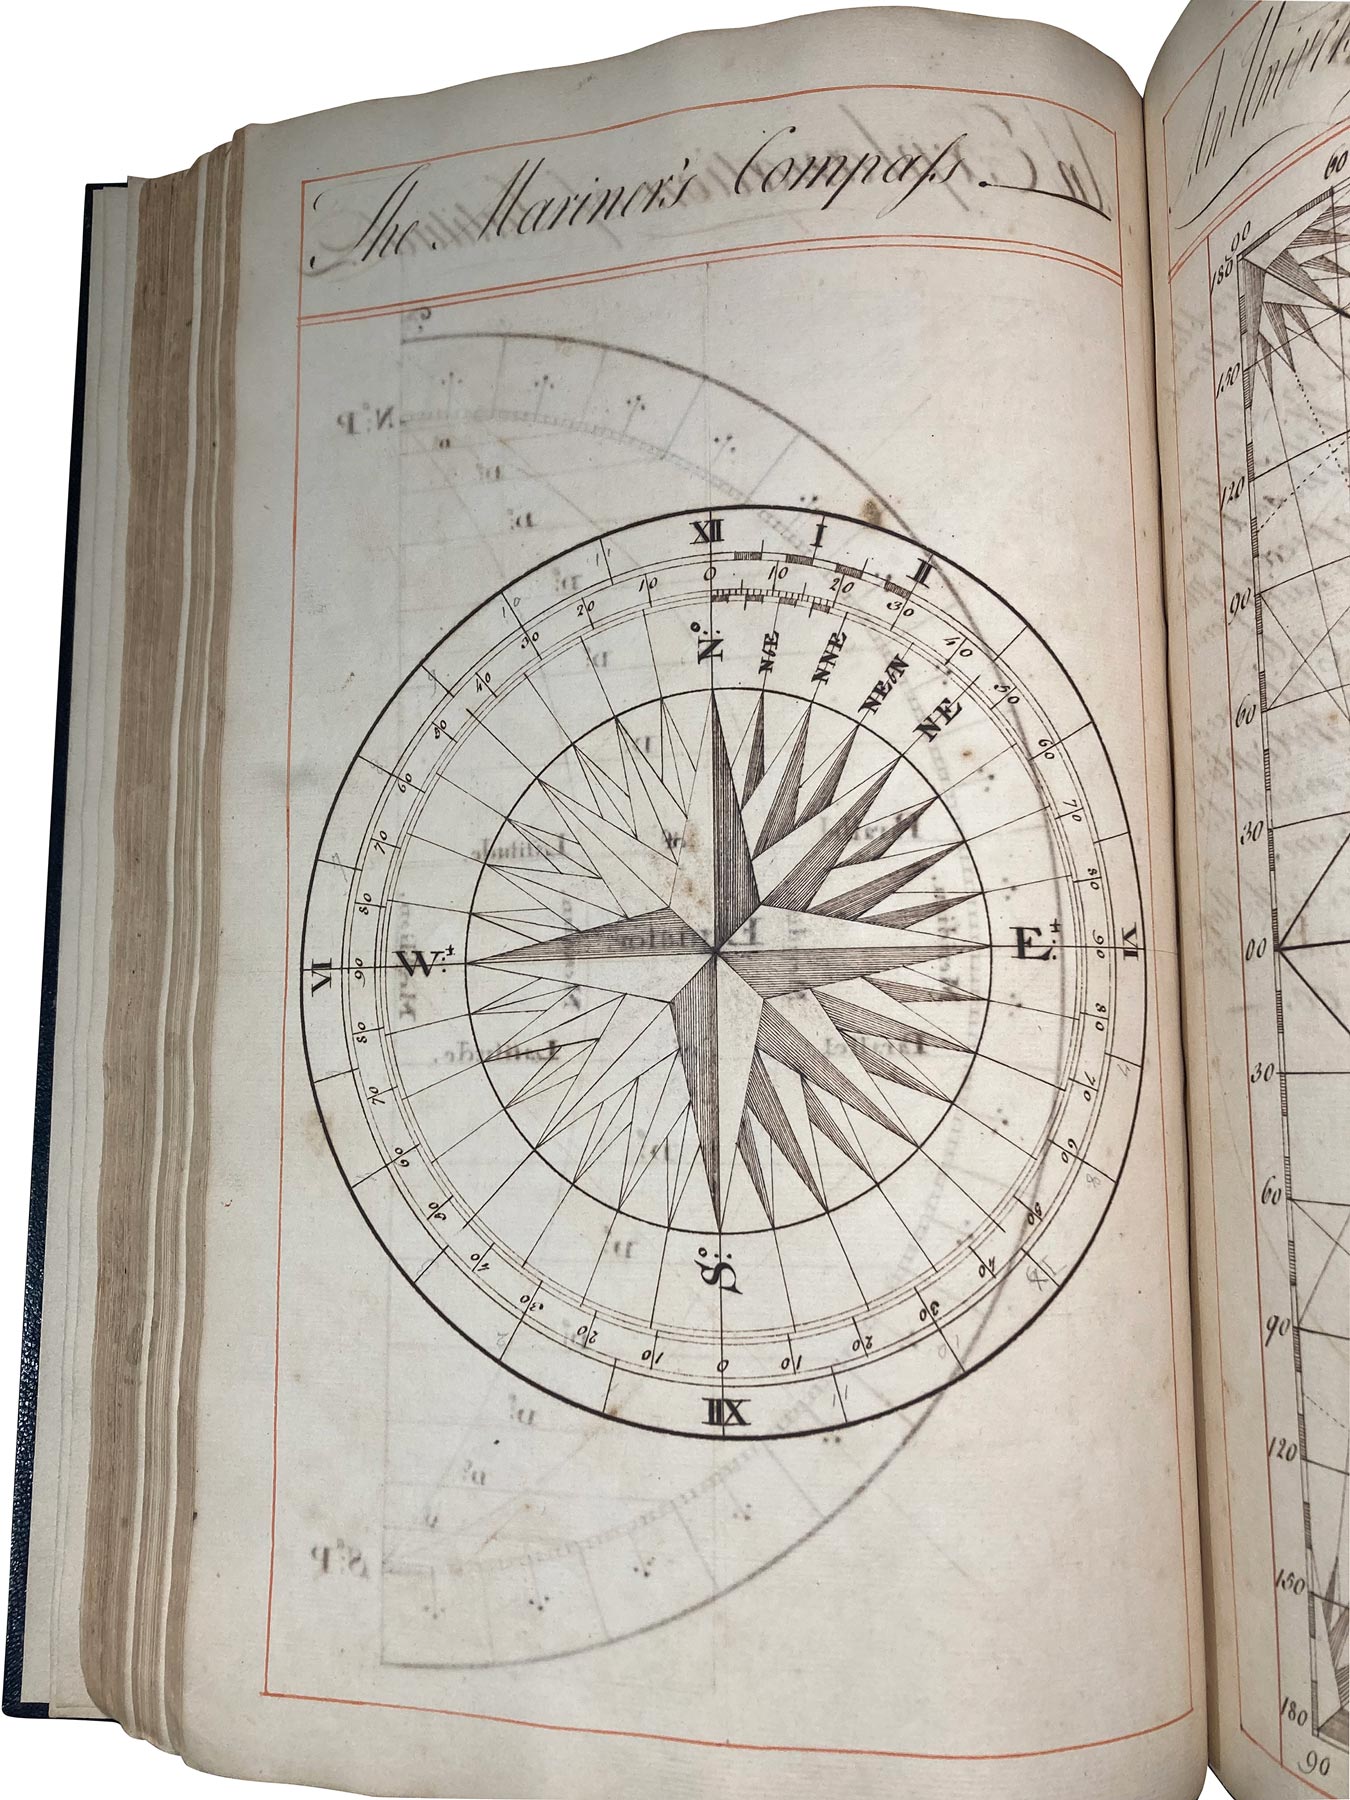 Practical mathematics manuscript, eighteenth century